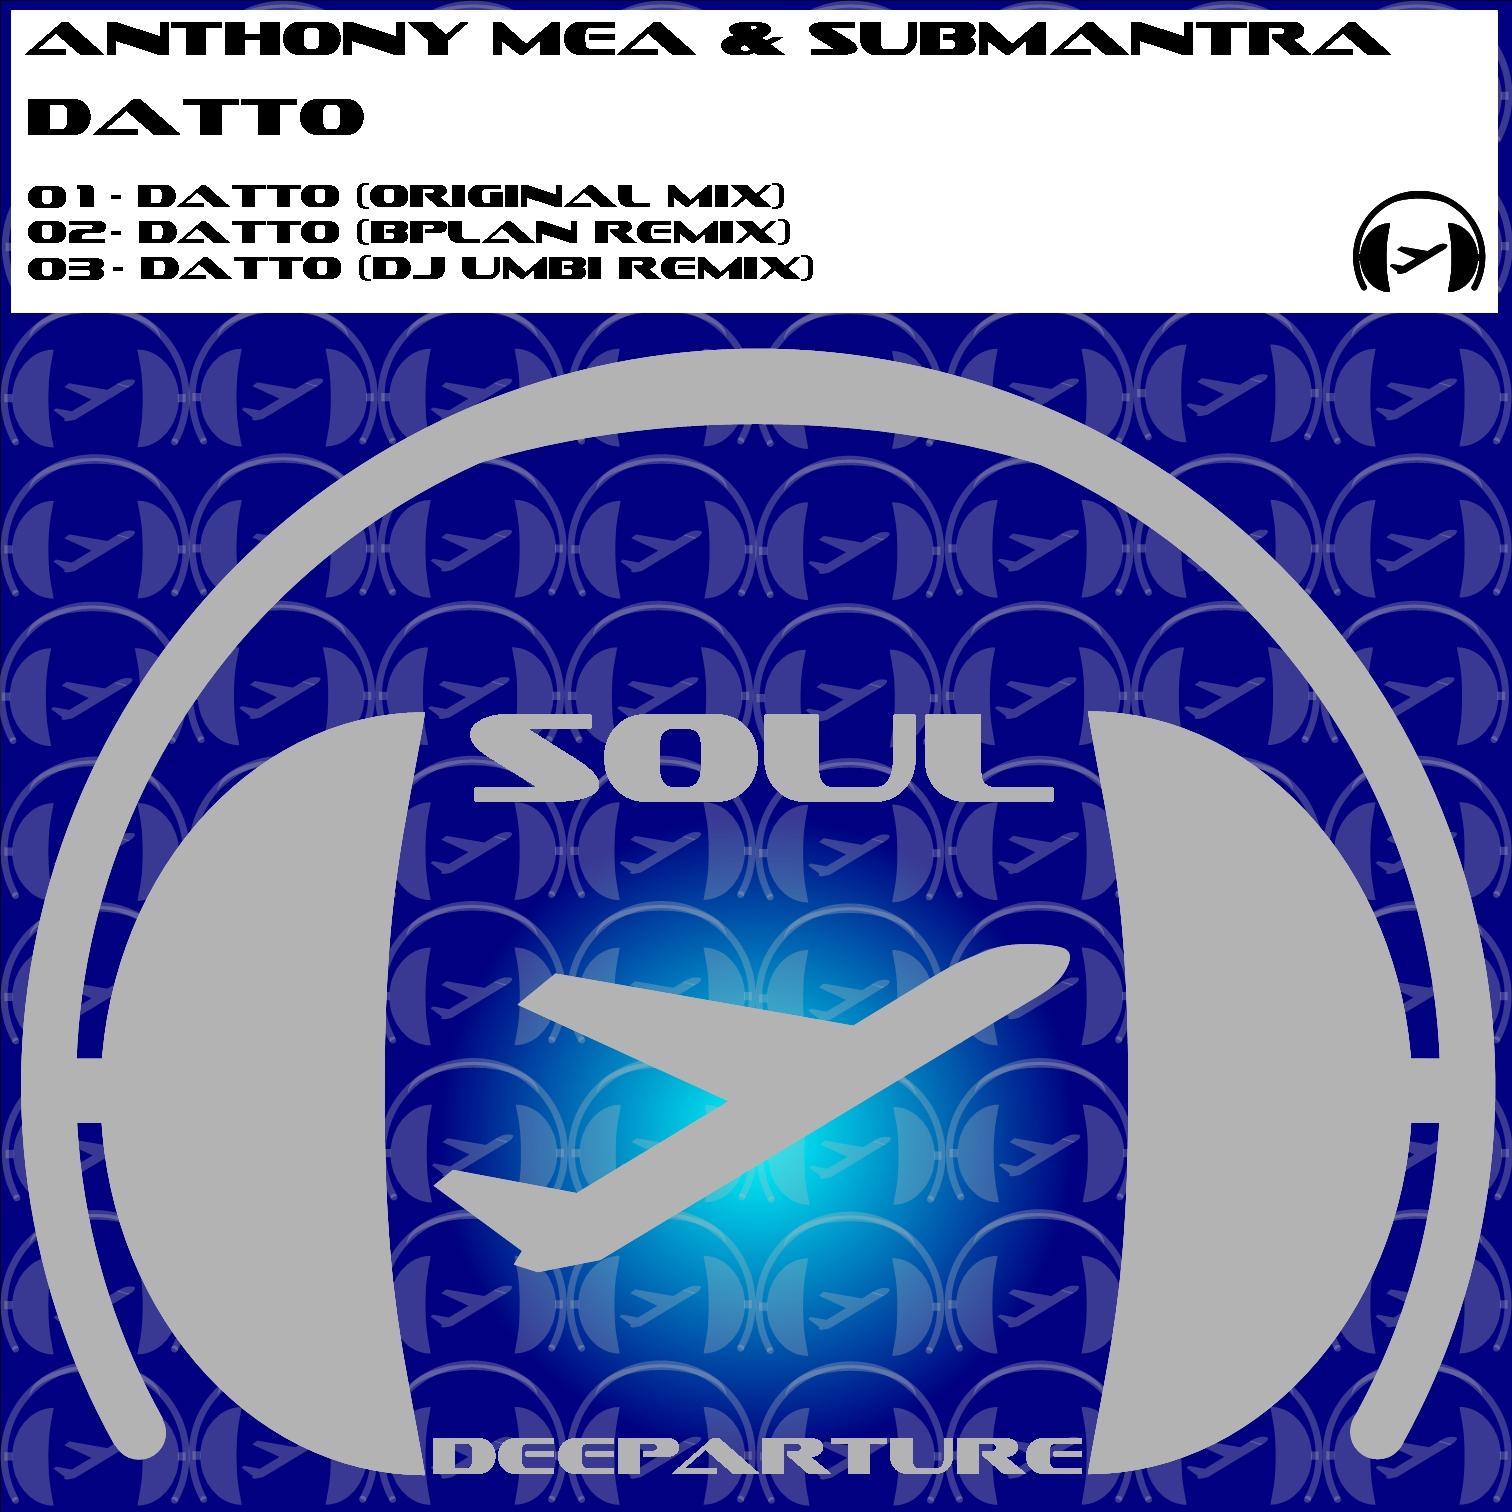 Anthony Mea, Submantra - Datto (BPlan Remix)